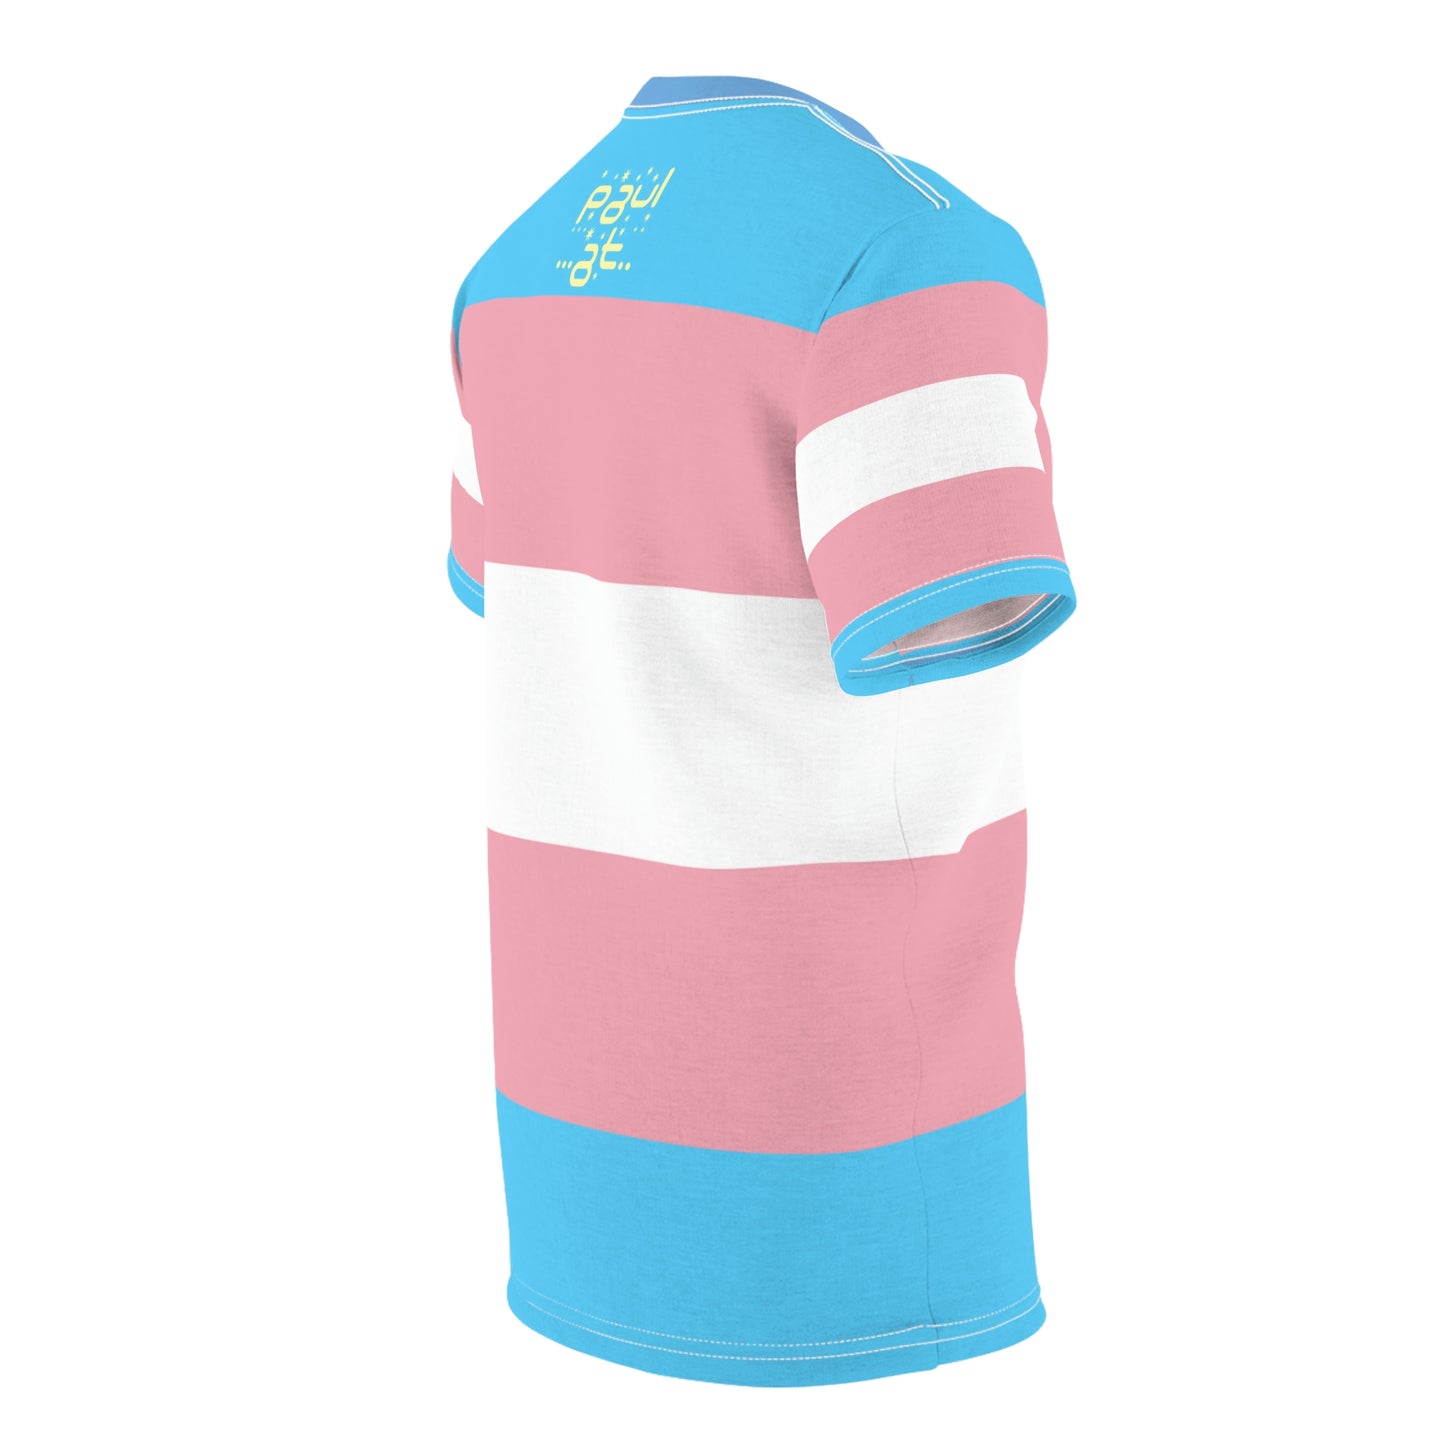 Transgender Pride Unisex T-Shirt